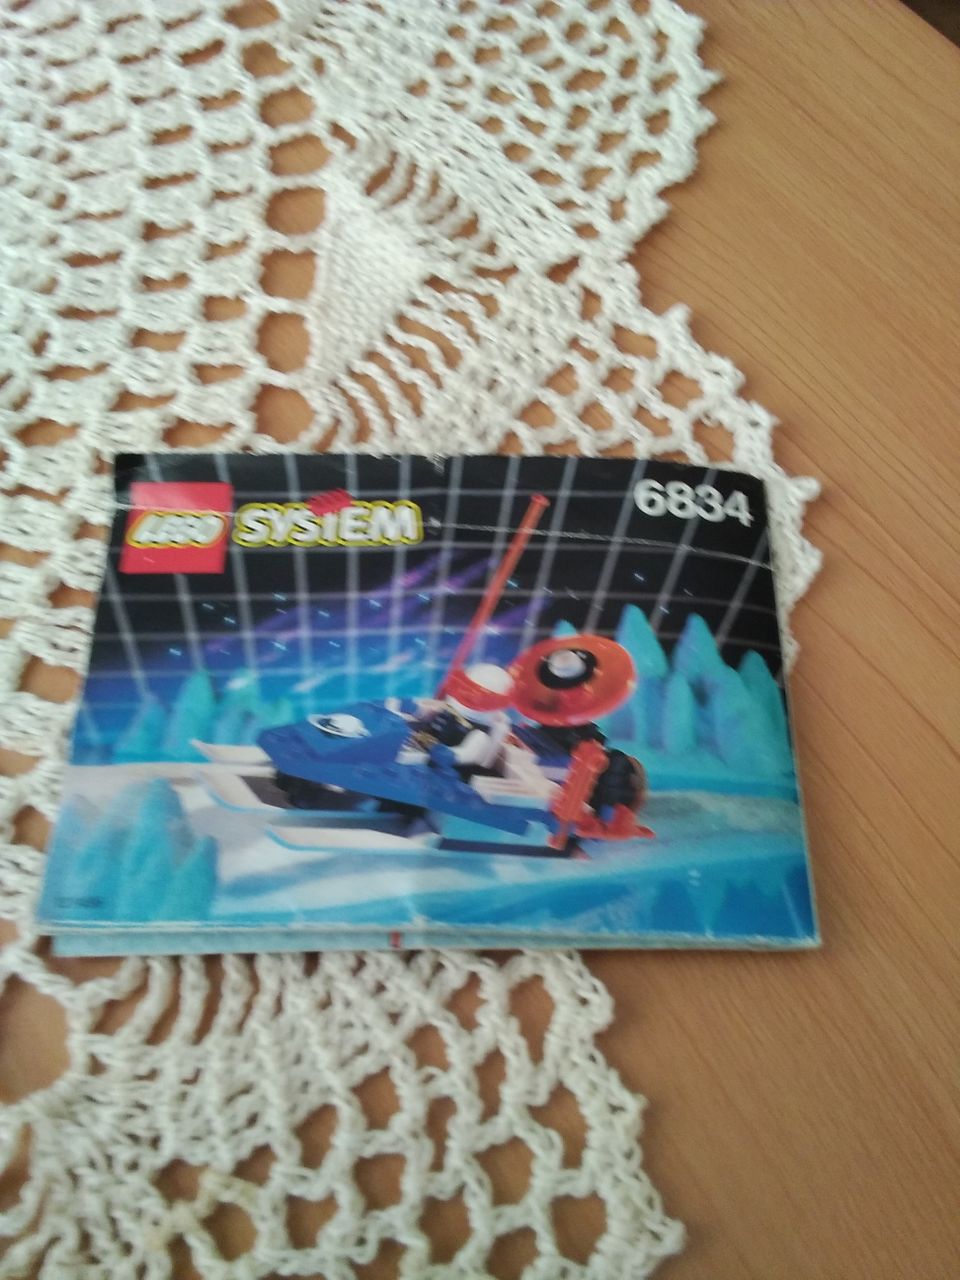 Lego avaruusjuttu celestial cled vuosi 1993